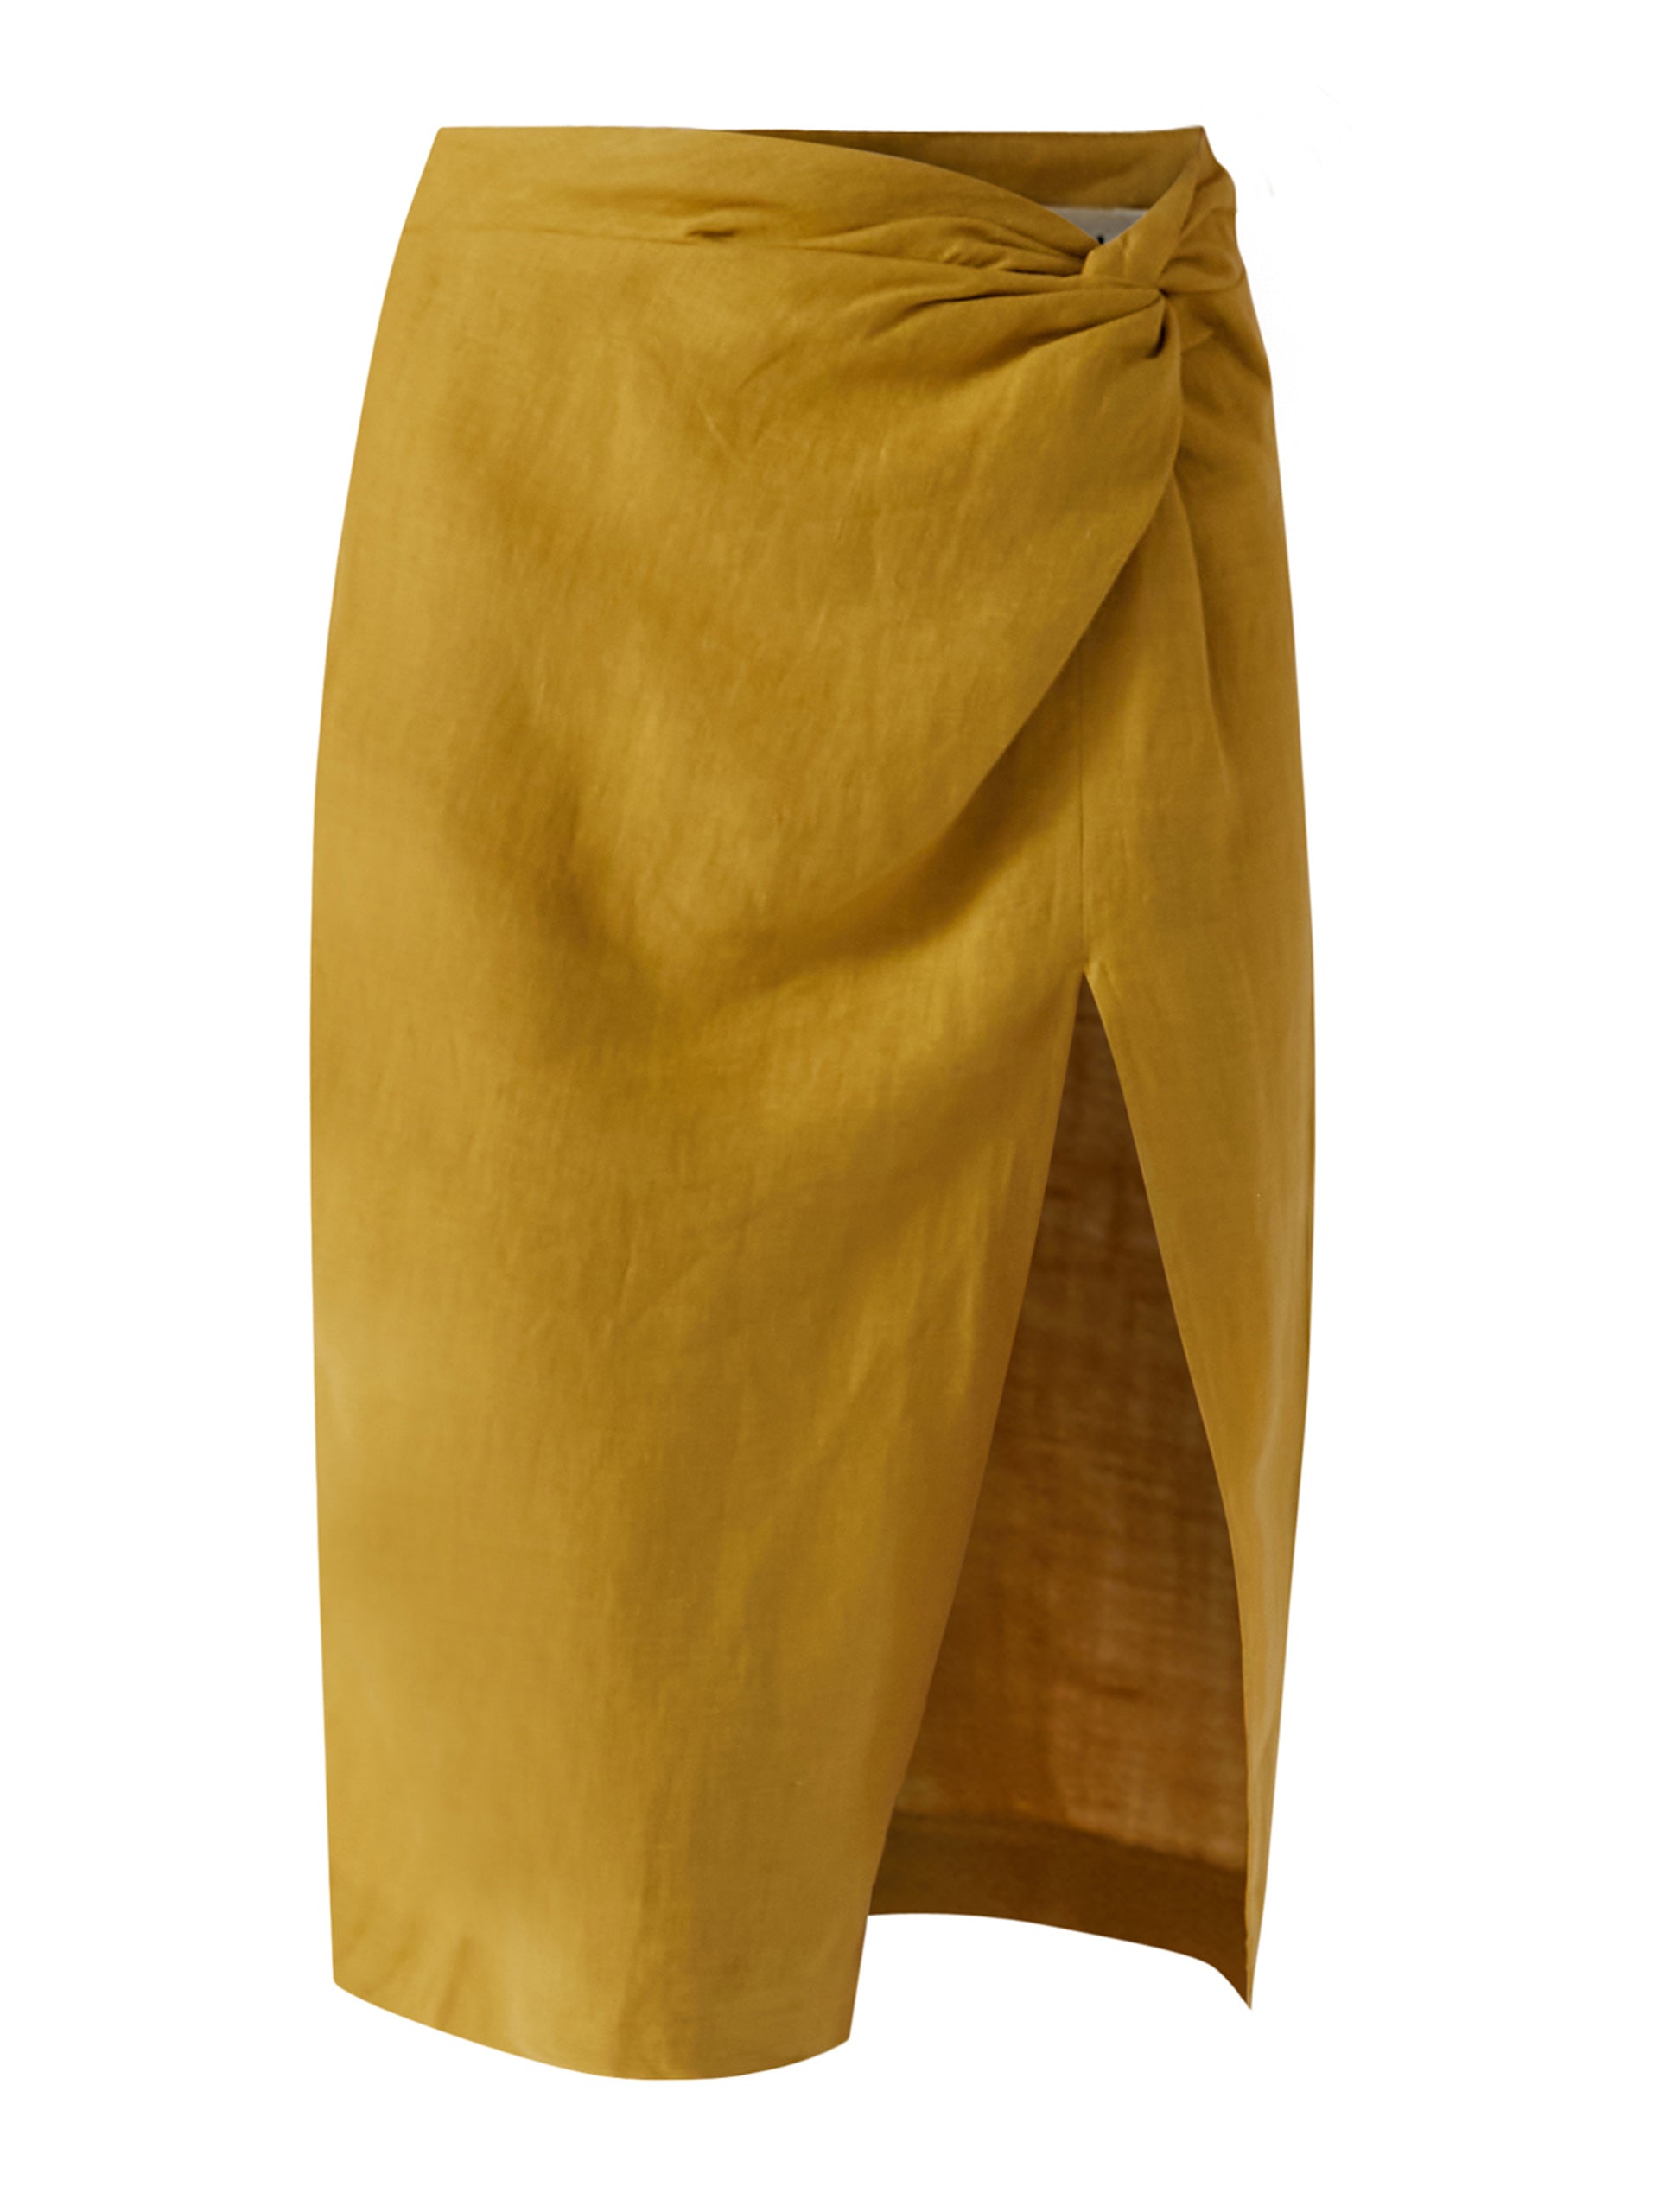 Gaby yellow linen midi skirt - Collagerie